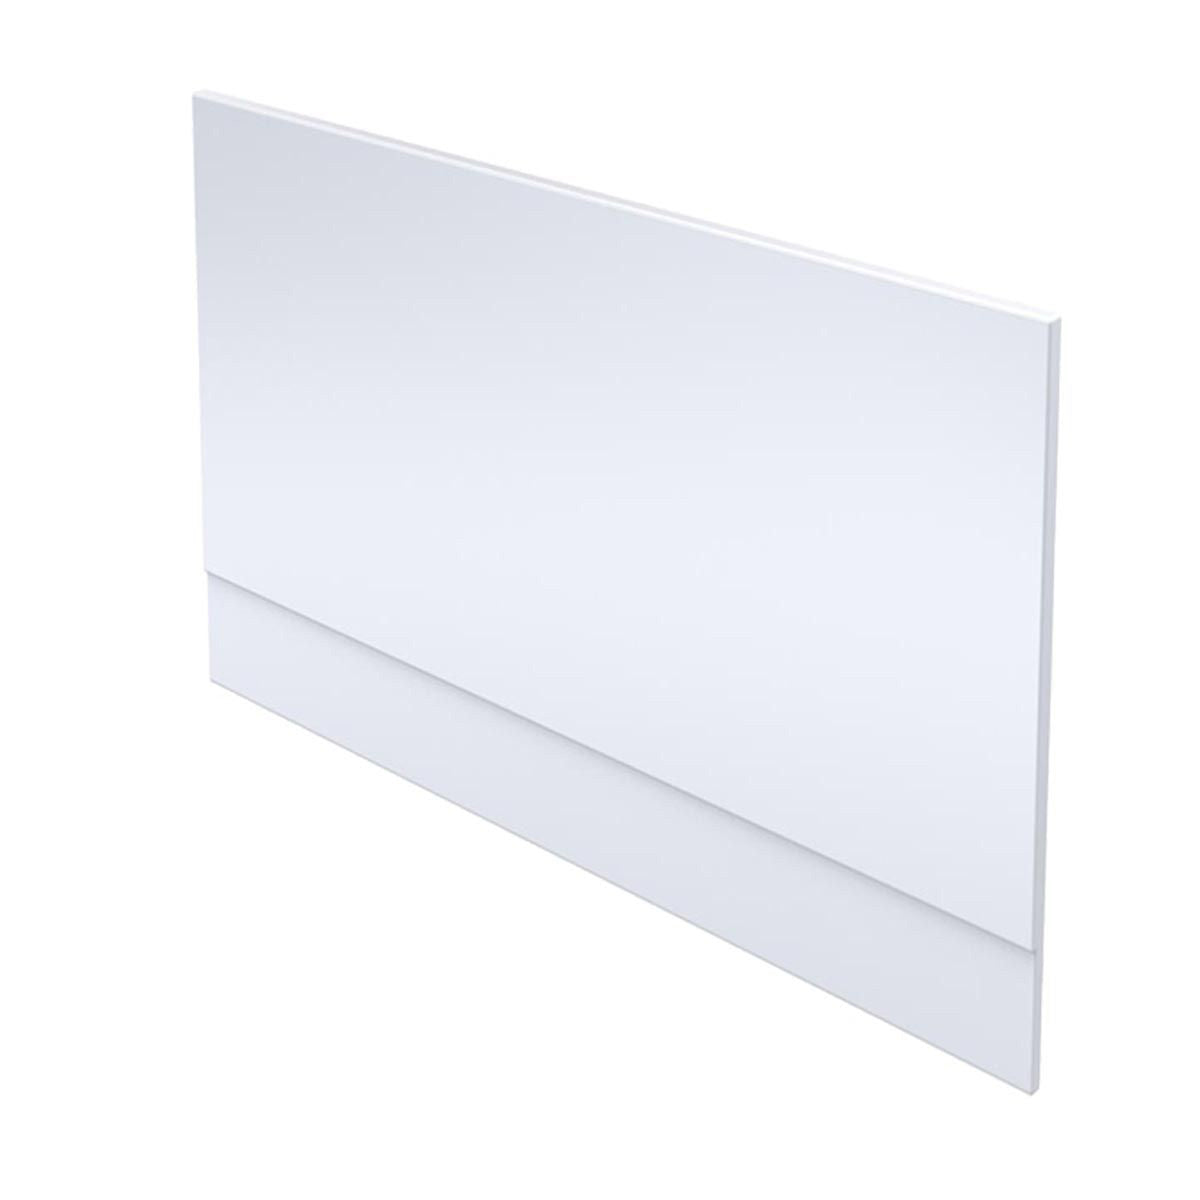 Bathroom High Gloss White Modern Acrylic End Bath Panel Cut to Size 790 x 510mm